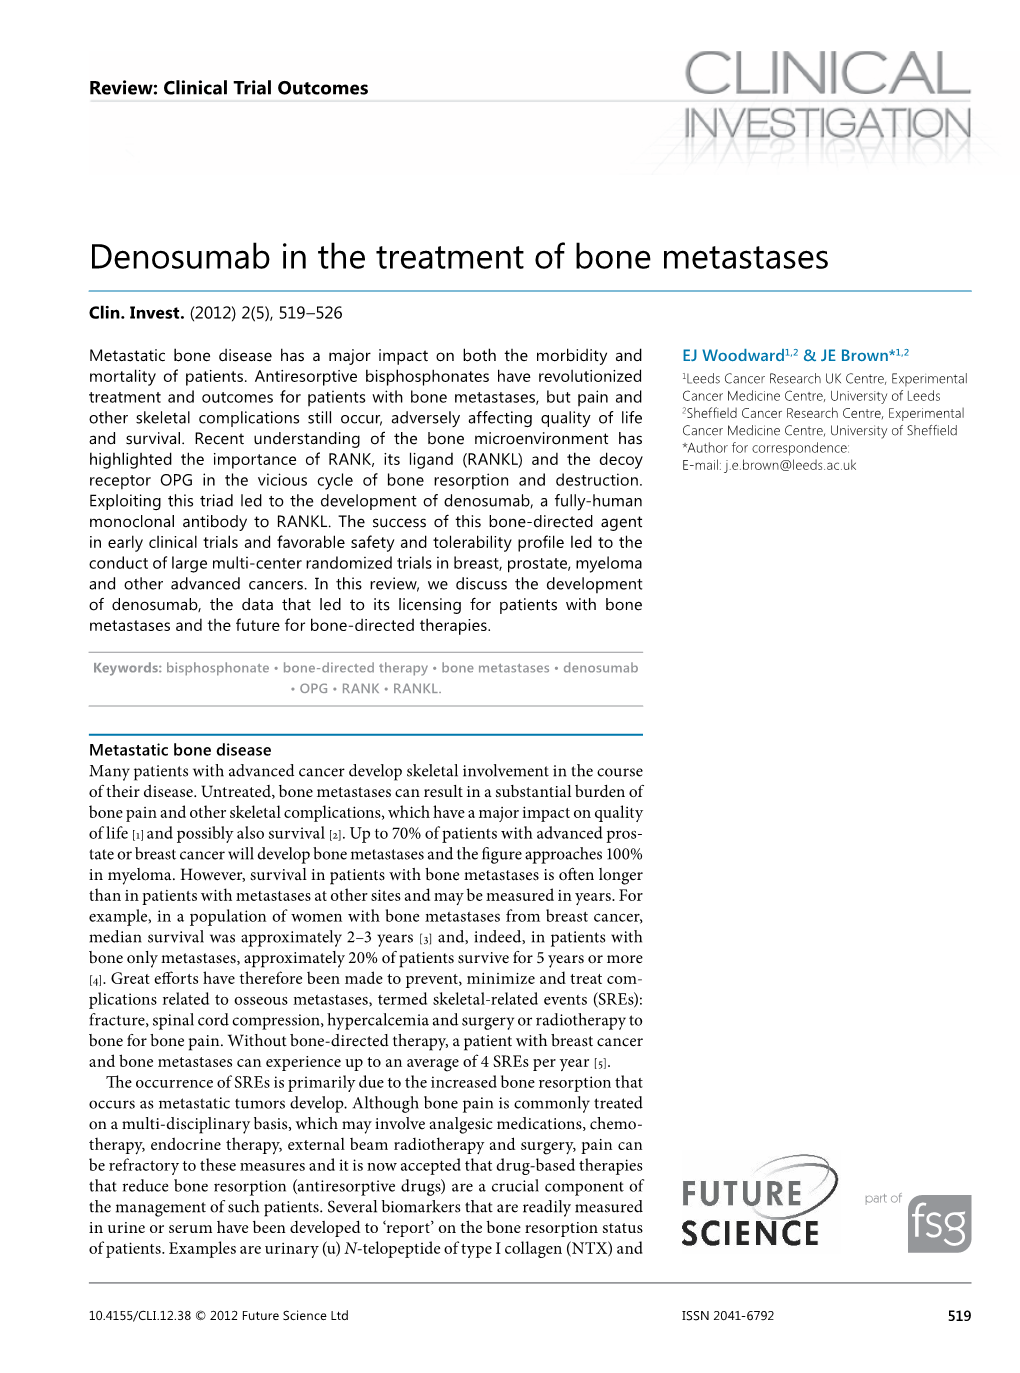 Denosumab in the Treatment of Bone Metastases